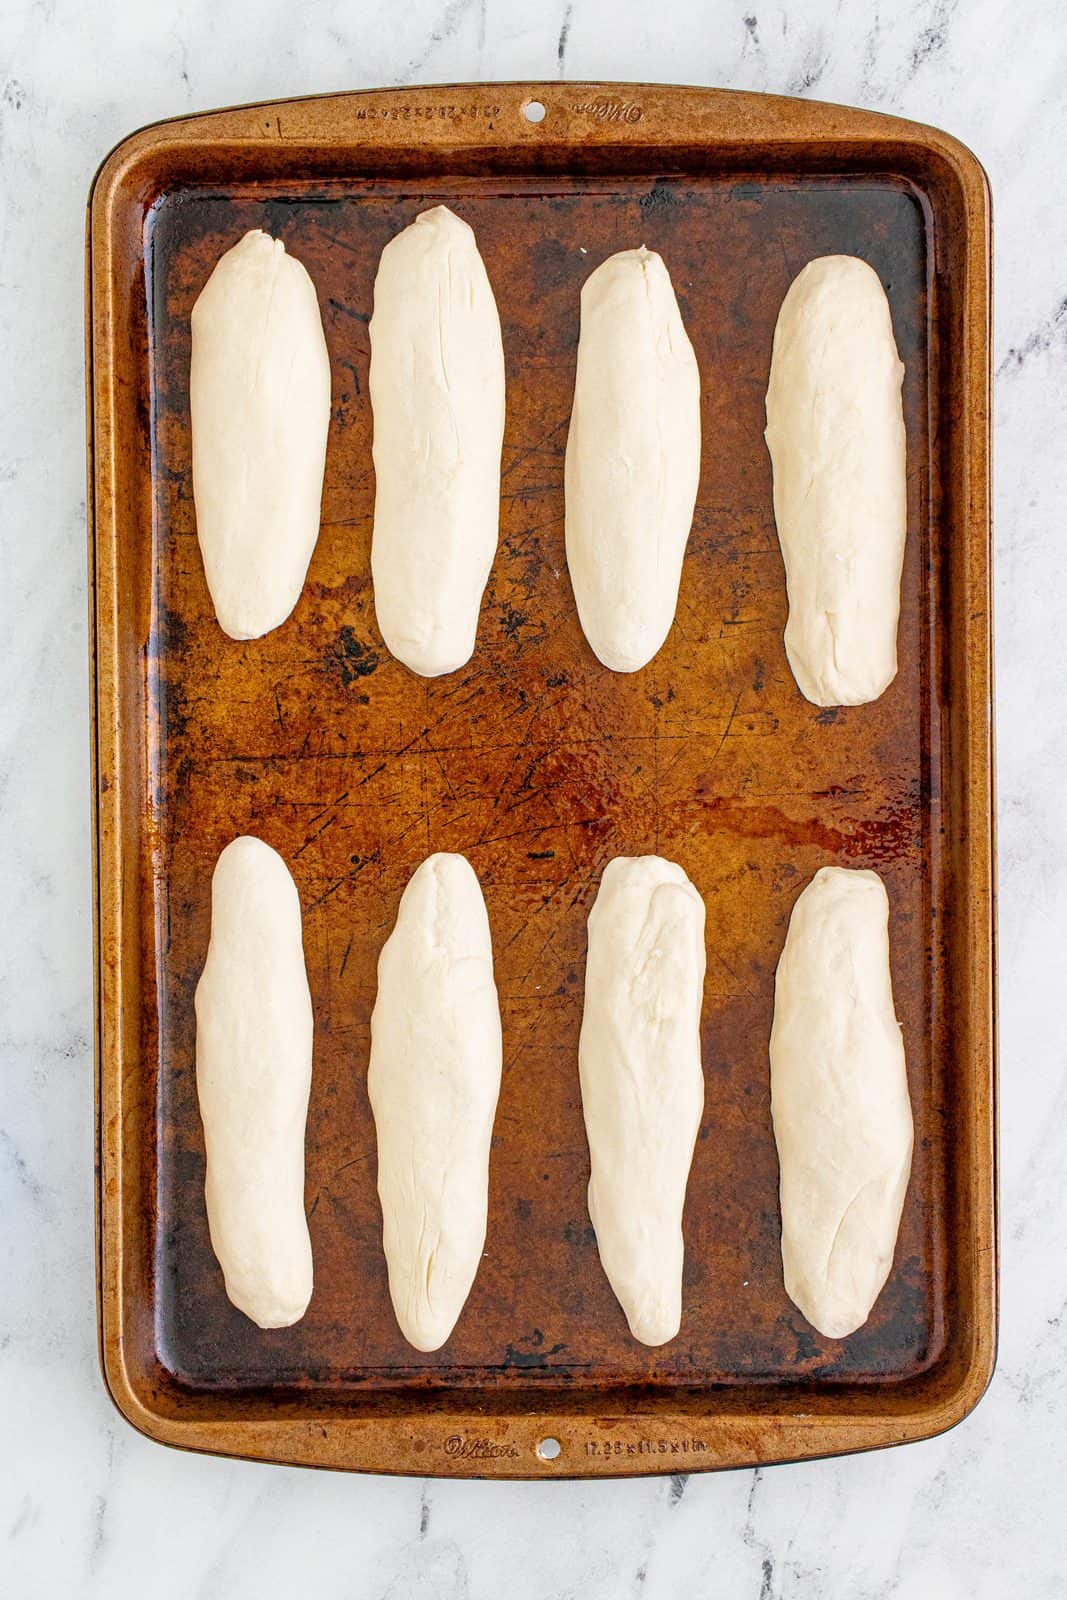 rolled breadsticks on a baking sheet.